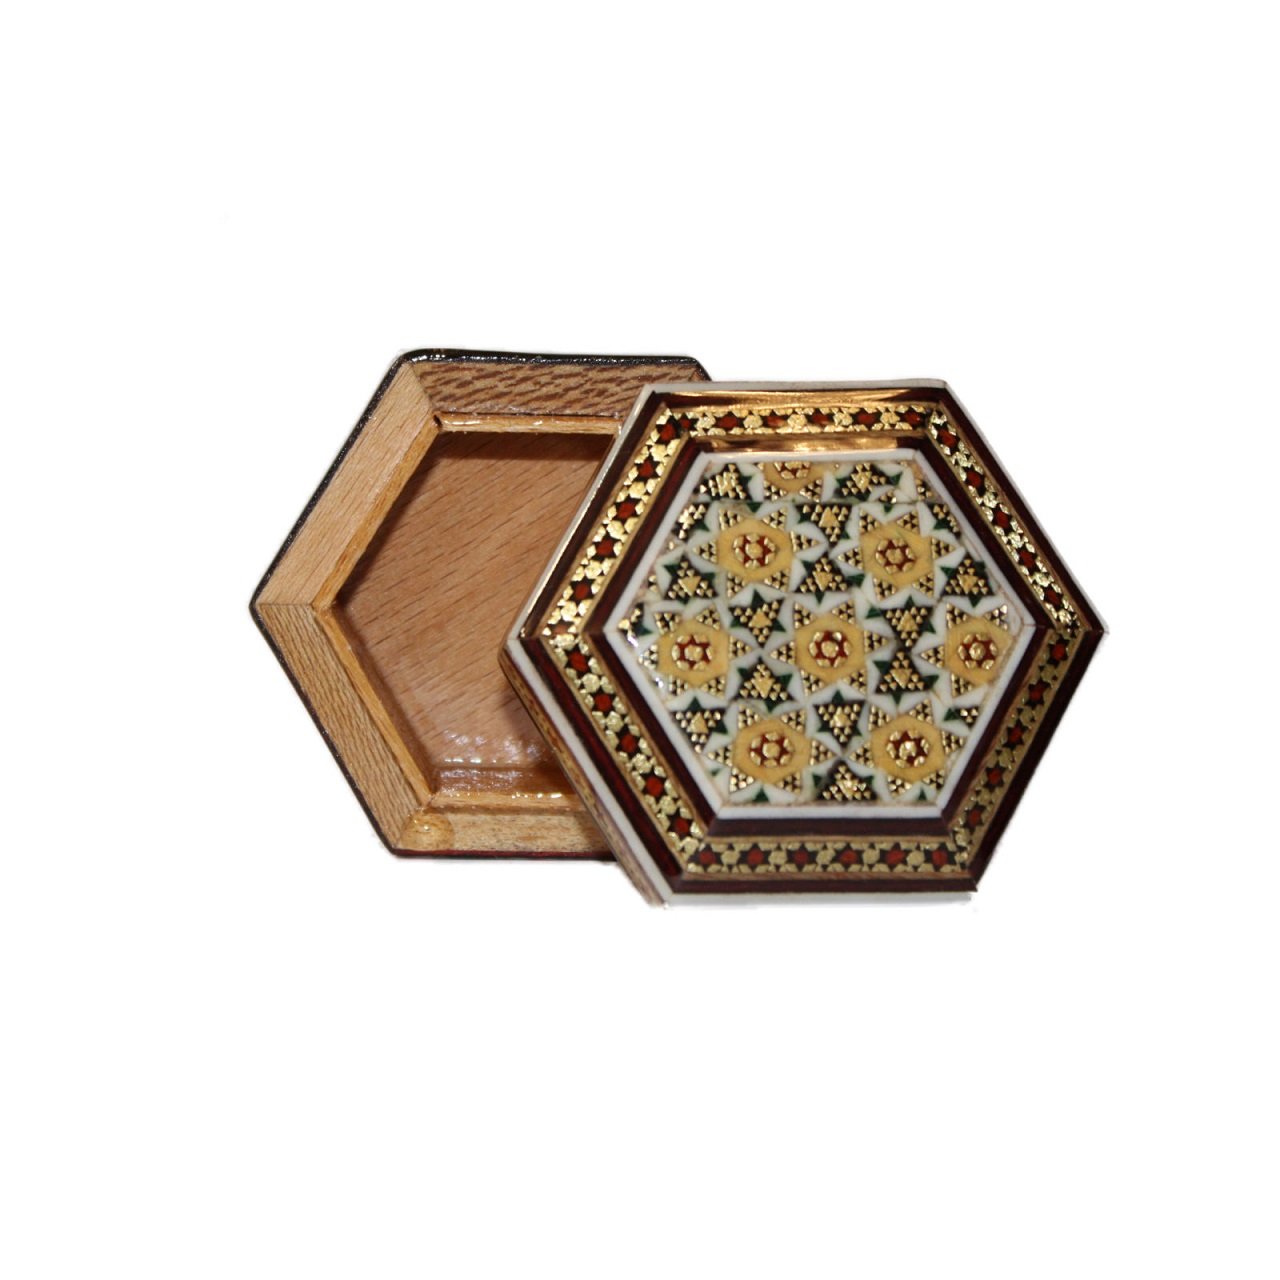 Khatam Jewelry box Model Eslimi Code 09 , Khatam box, Inlaid, Khatam Jewelry box, Khatam